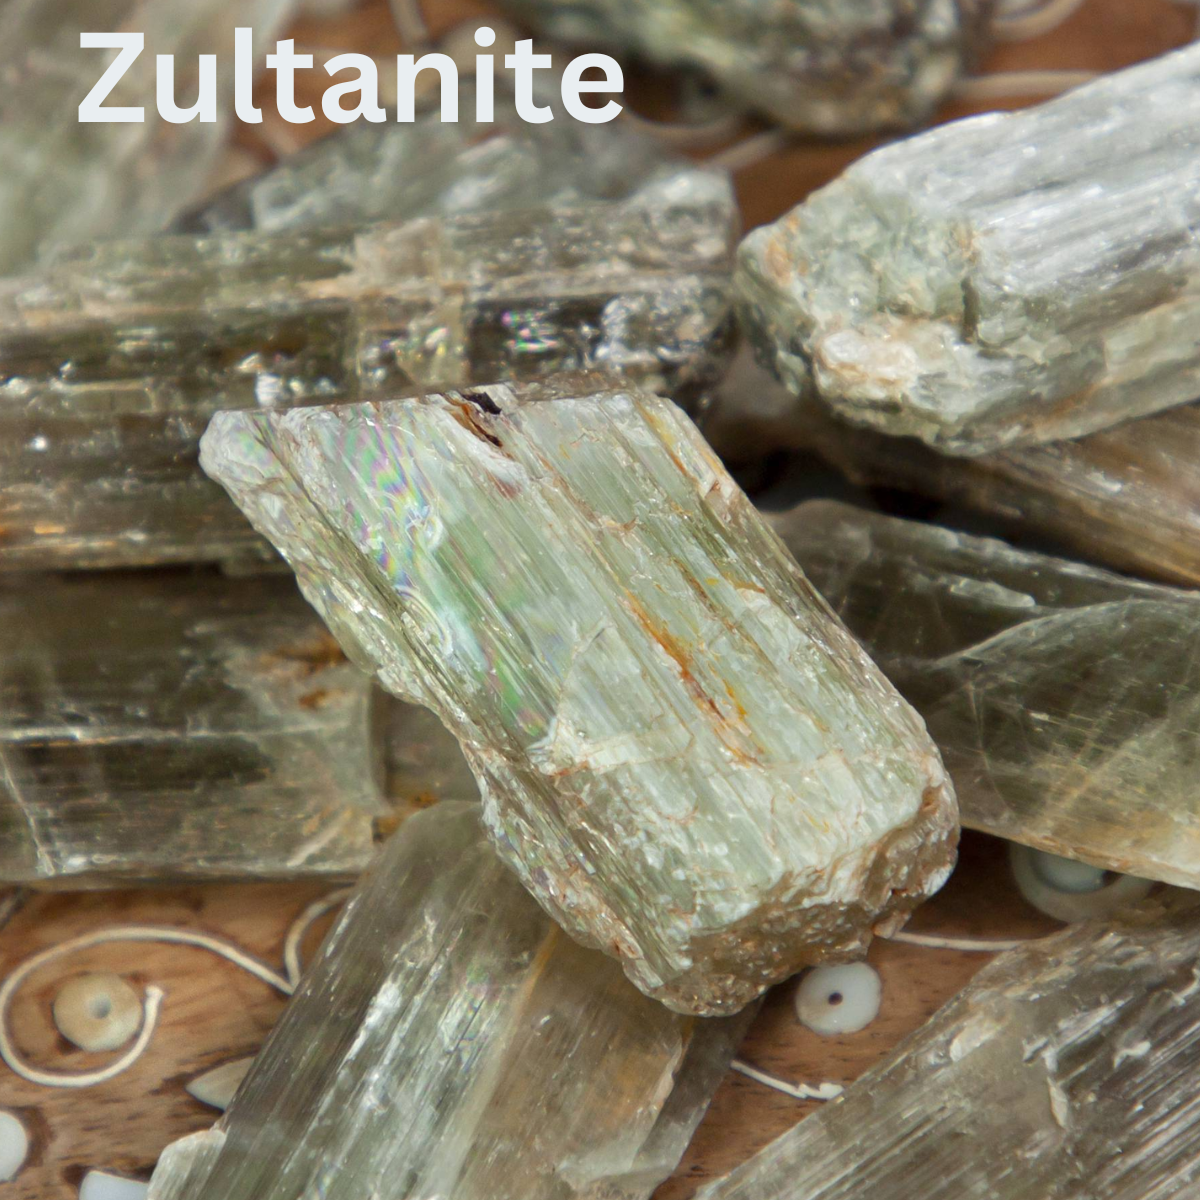 . Zultanite | Stone Information, Healing Properties, Uses